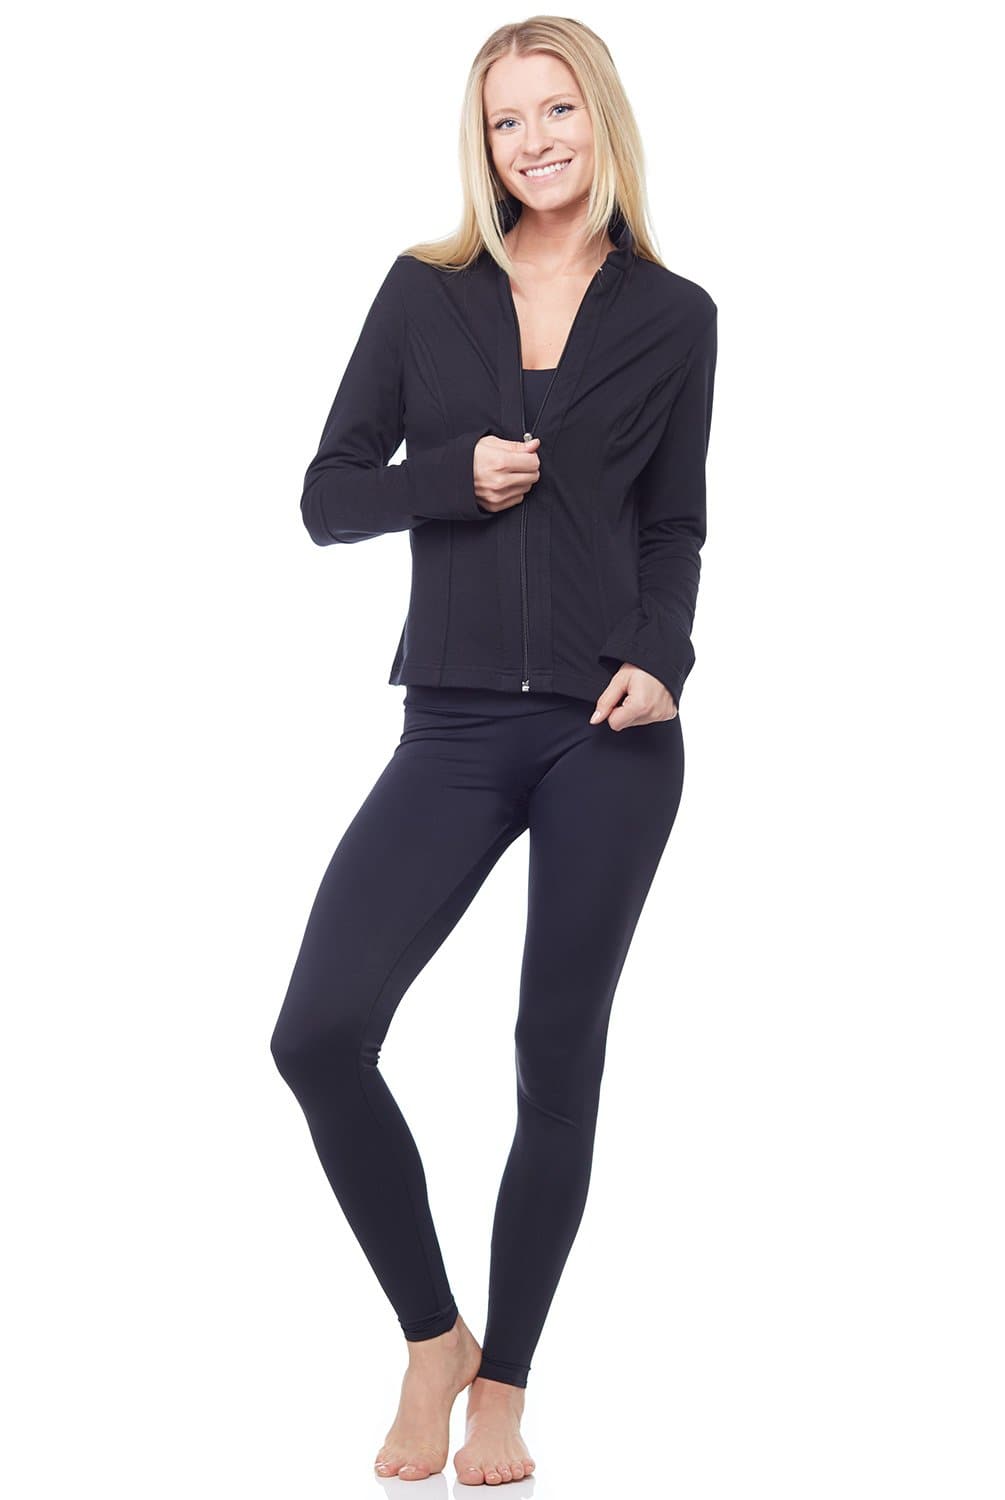 Sandra McCray Flat Fitted Jacket - Evolve Fit Wear